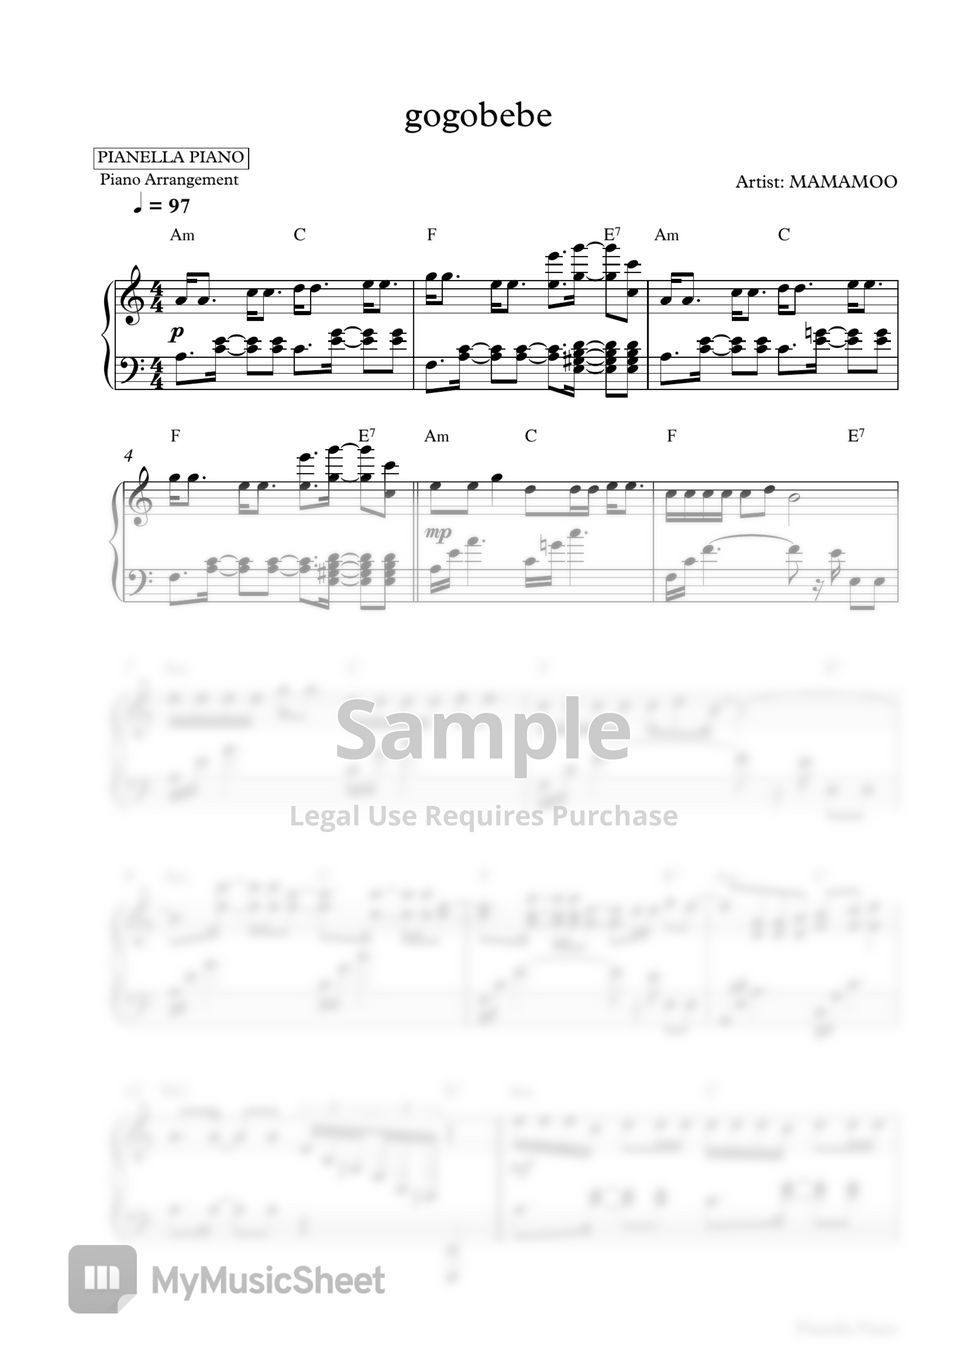 MAMAMOO - gogobebe (Piano Sheet) by Pianella Piano